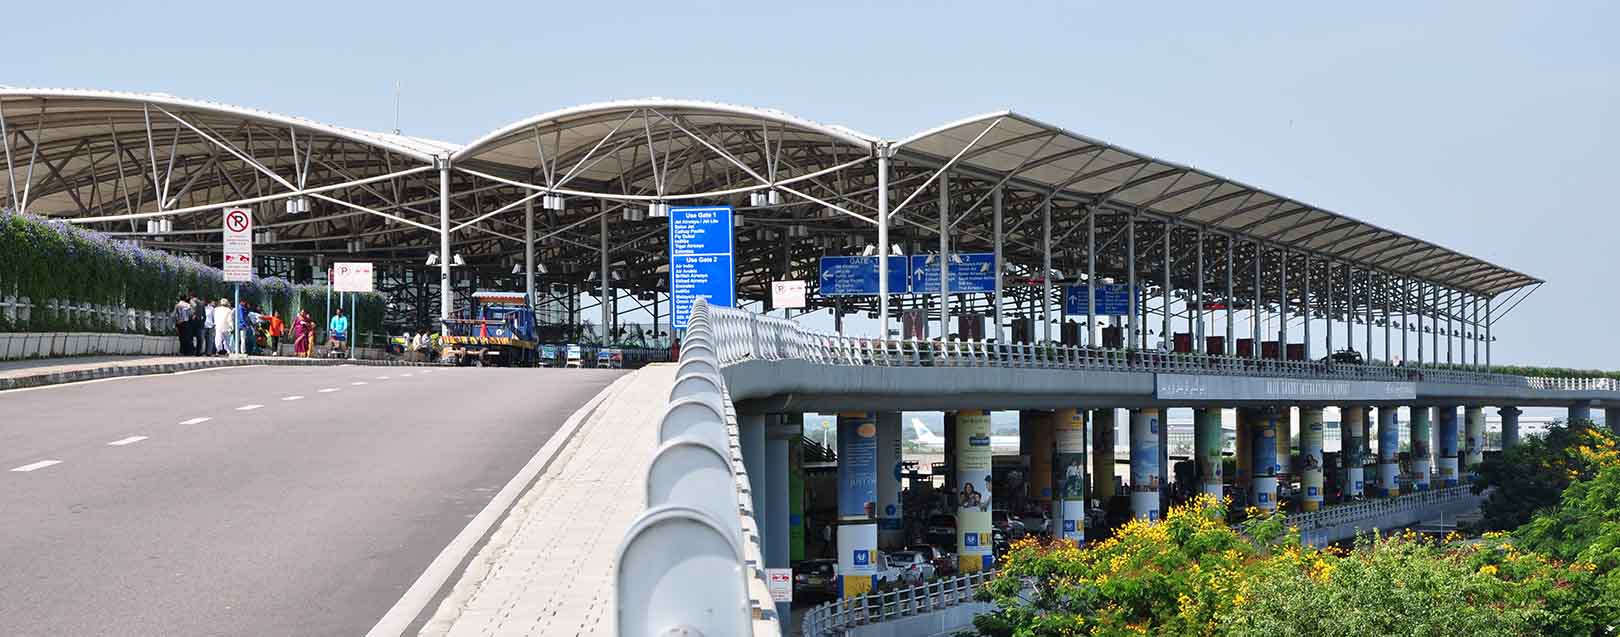 Prem Watsa to buy GVK’s 33% stake in Bangalore Airport